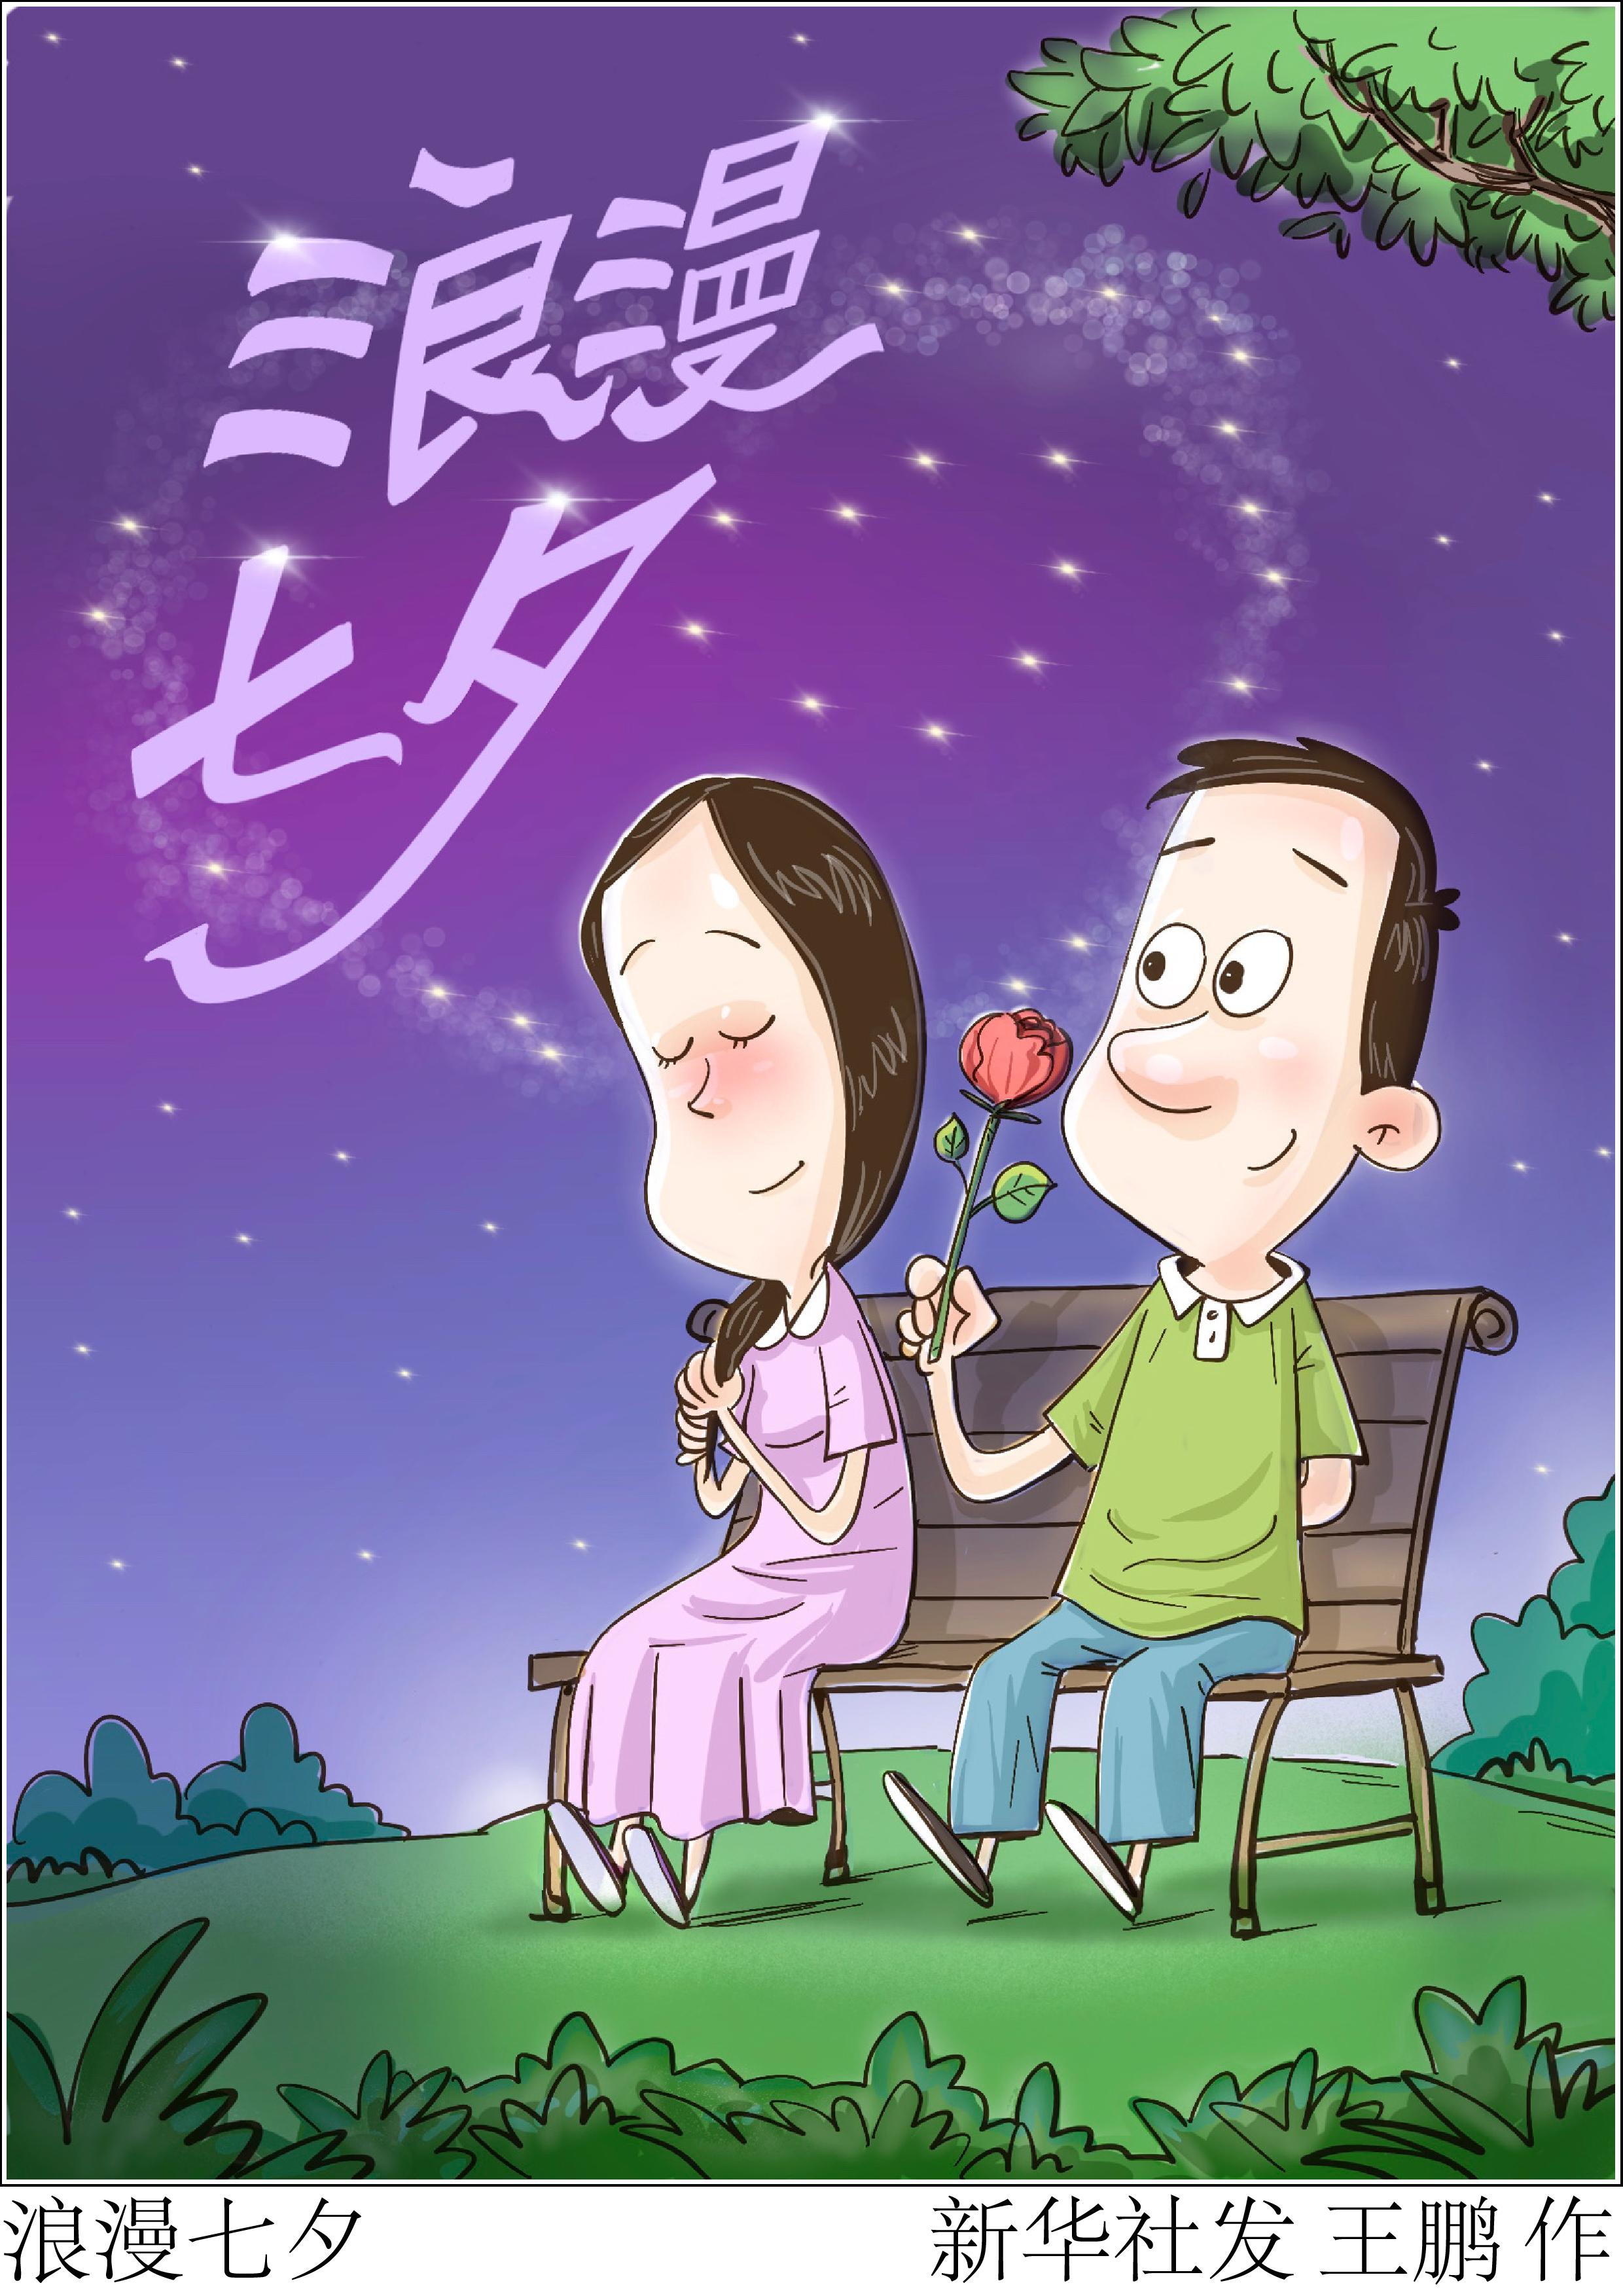 (Charts·Comics) [Chinese Valentine's Day] Romantic Chinese Valentine's Day